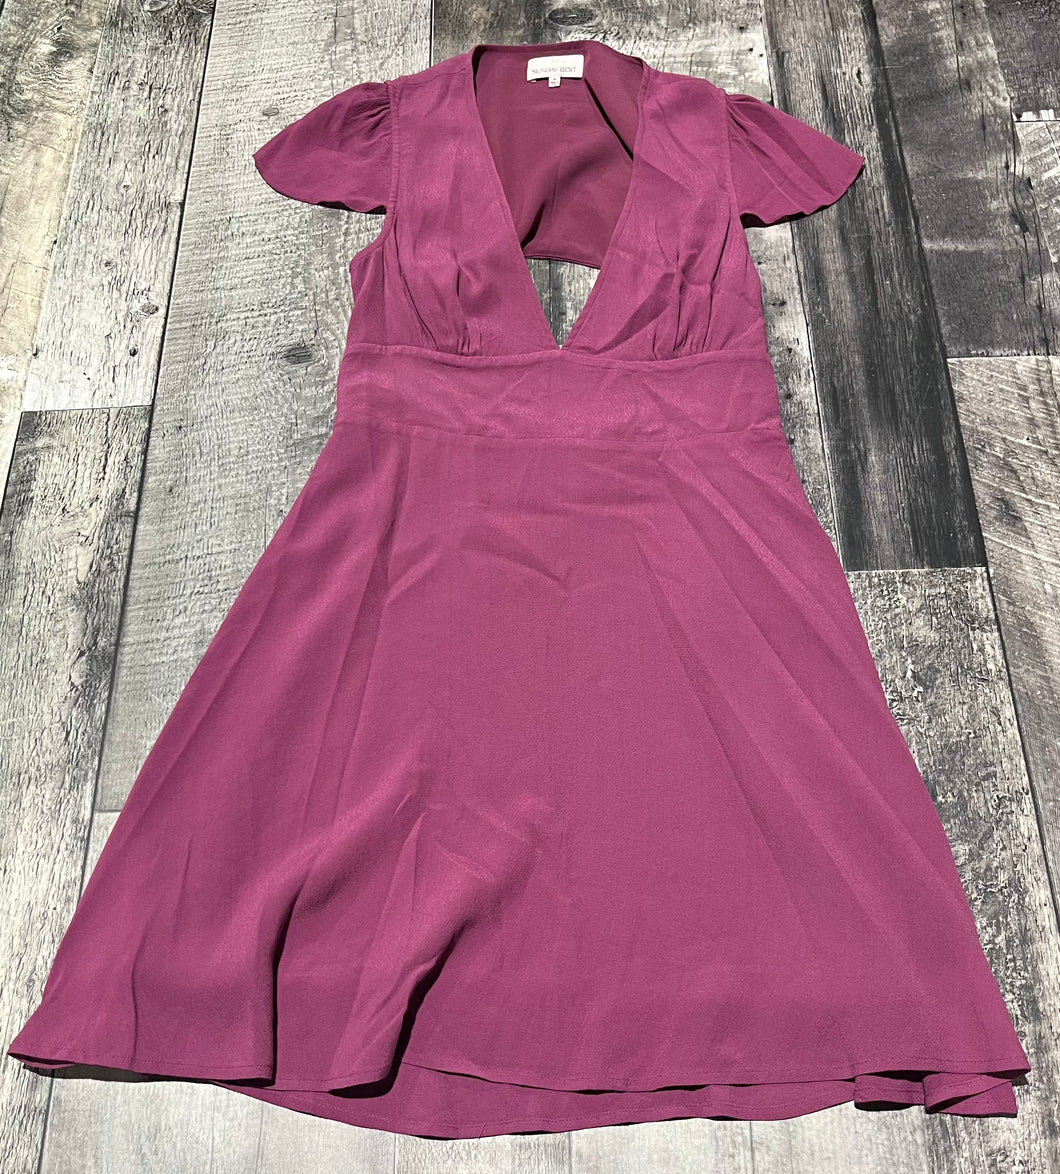 Sunday Best purple dress - Hers size 6